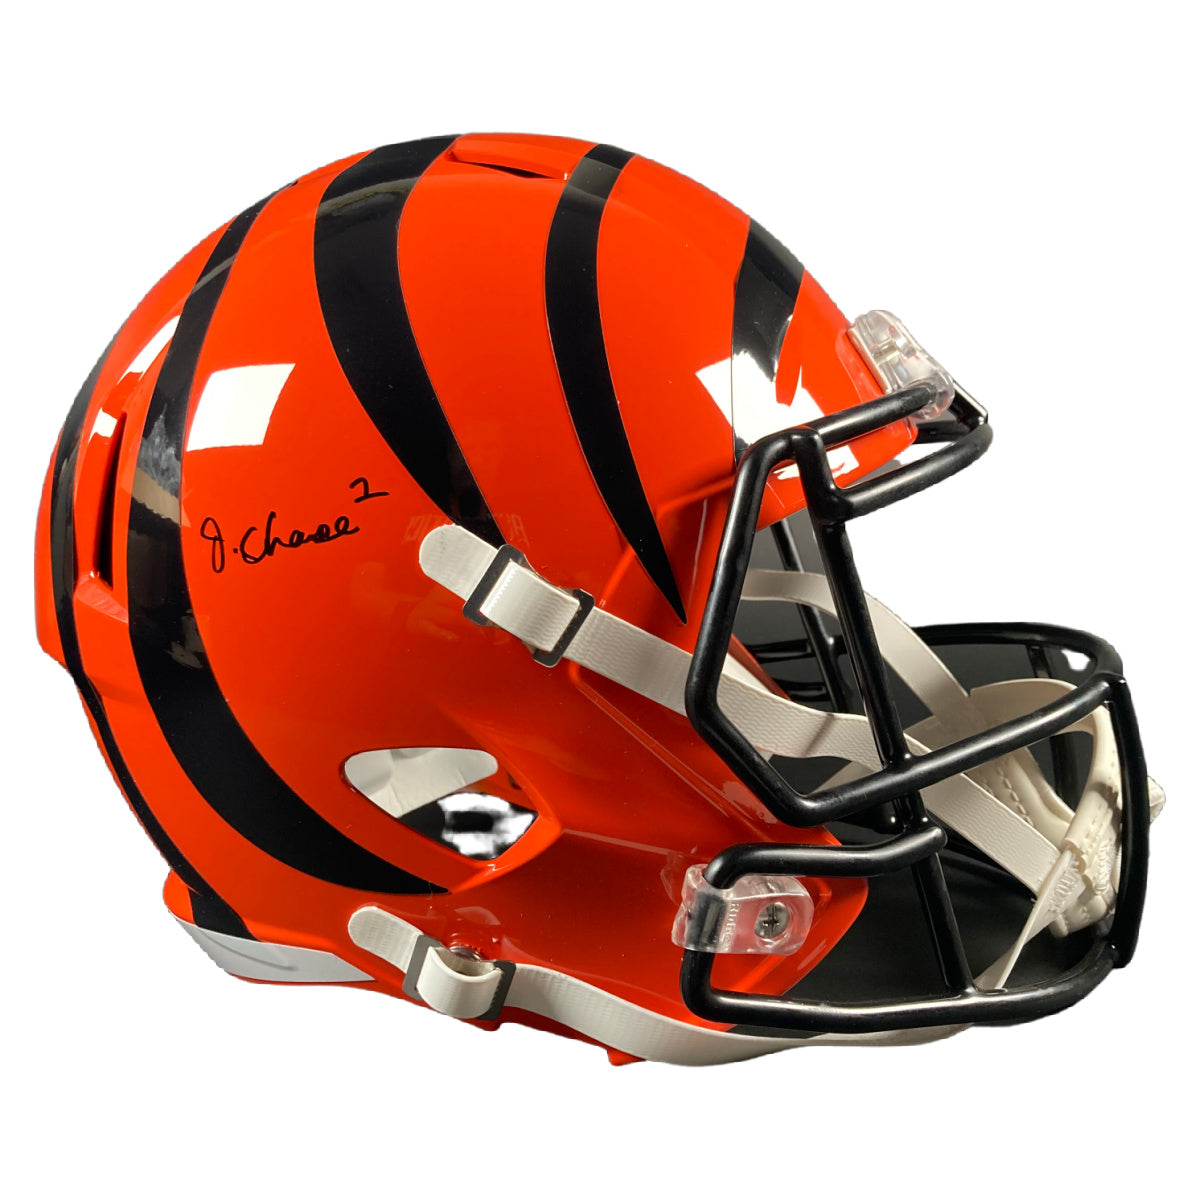 Ja'Marr Chase Signed Cincinnati Bengals FS Helmet REP Autographed BAS COA